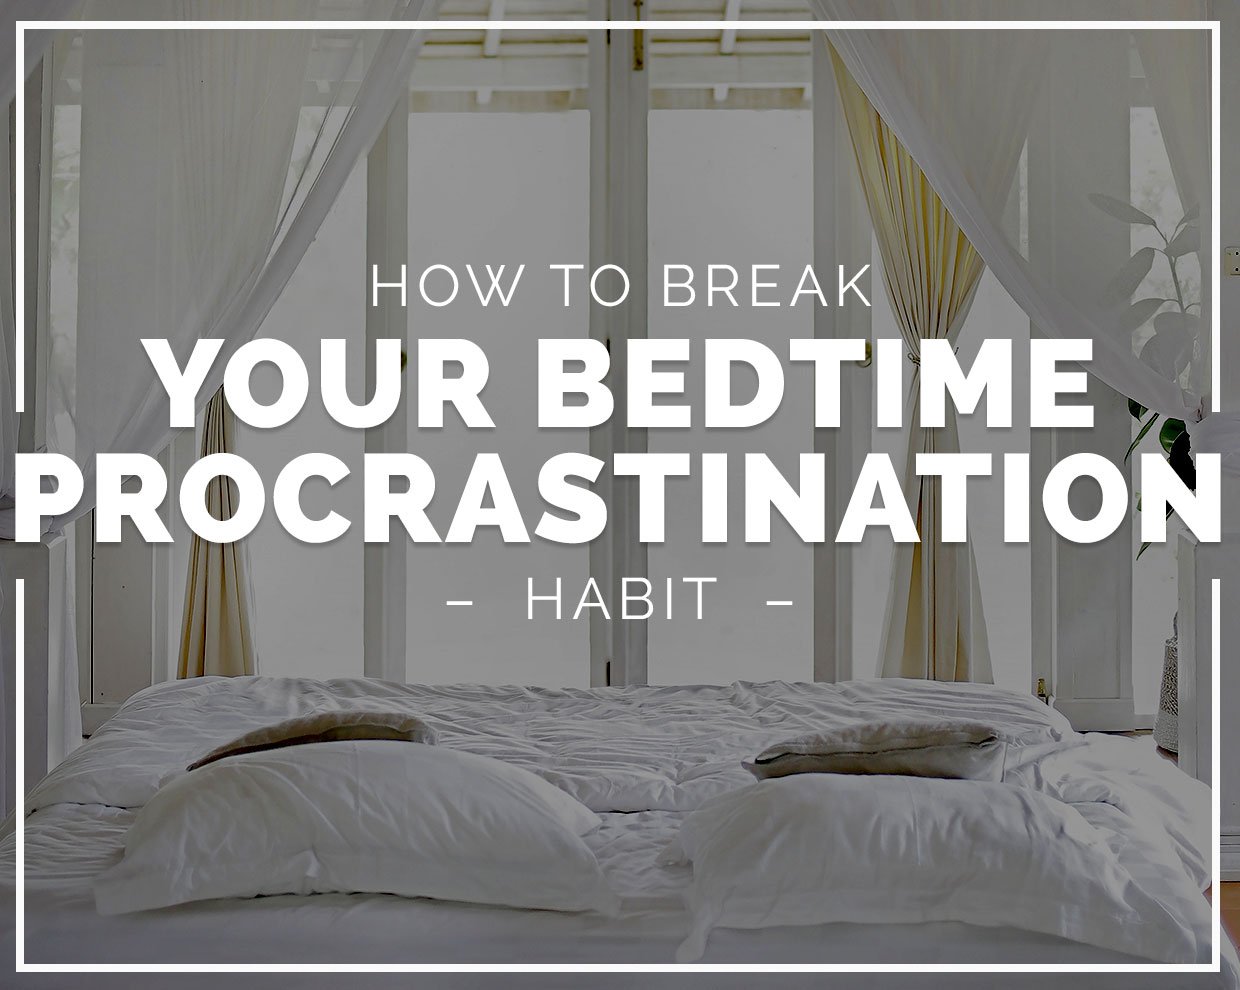 How to break your bedtime procrastination habit